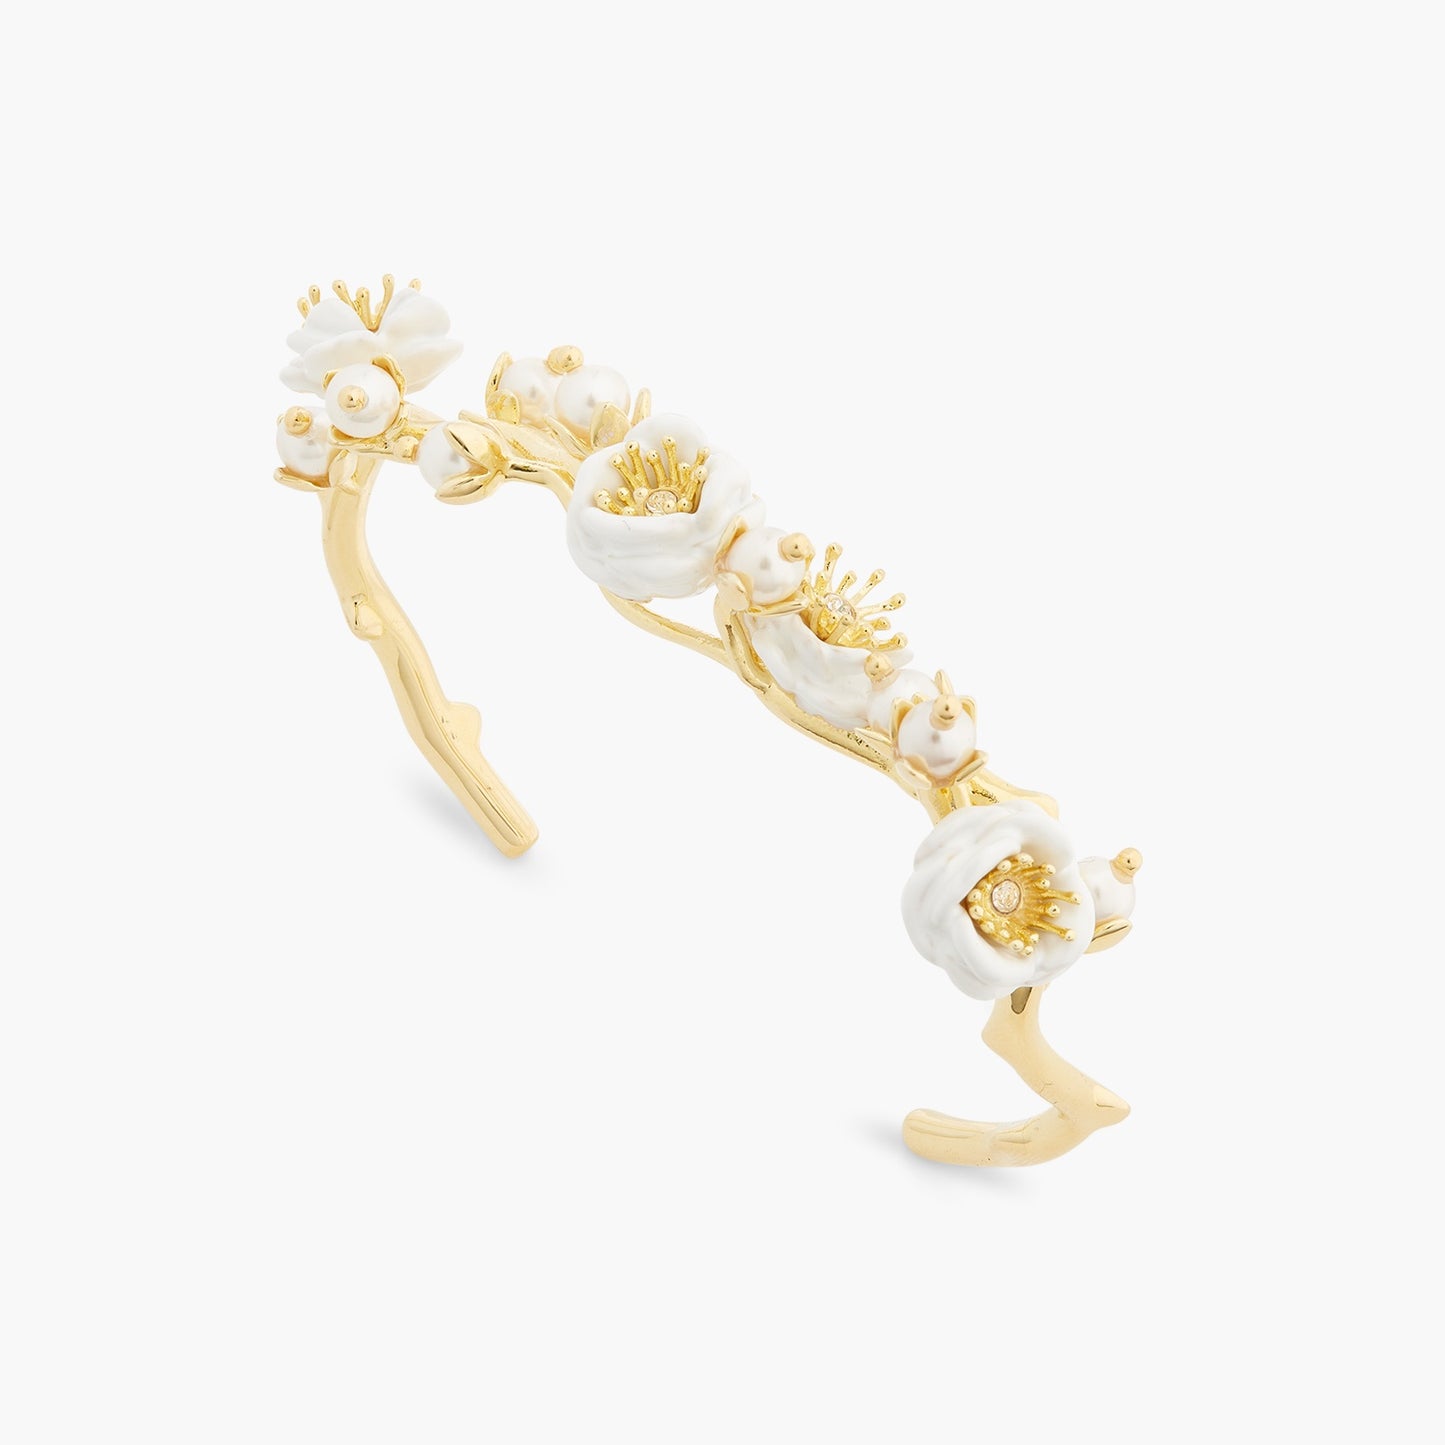 White Rose Branch And Pearls Bangle Bracelet | ASET2031